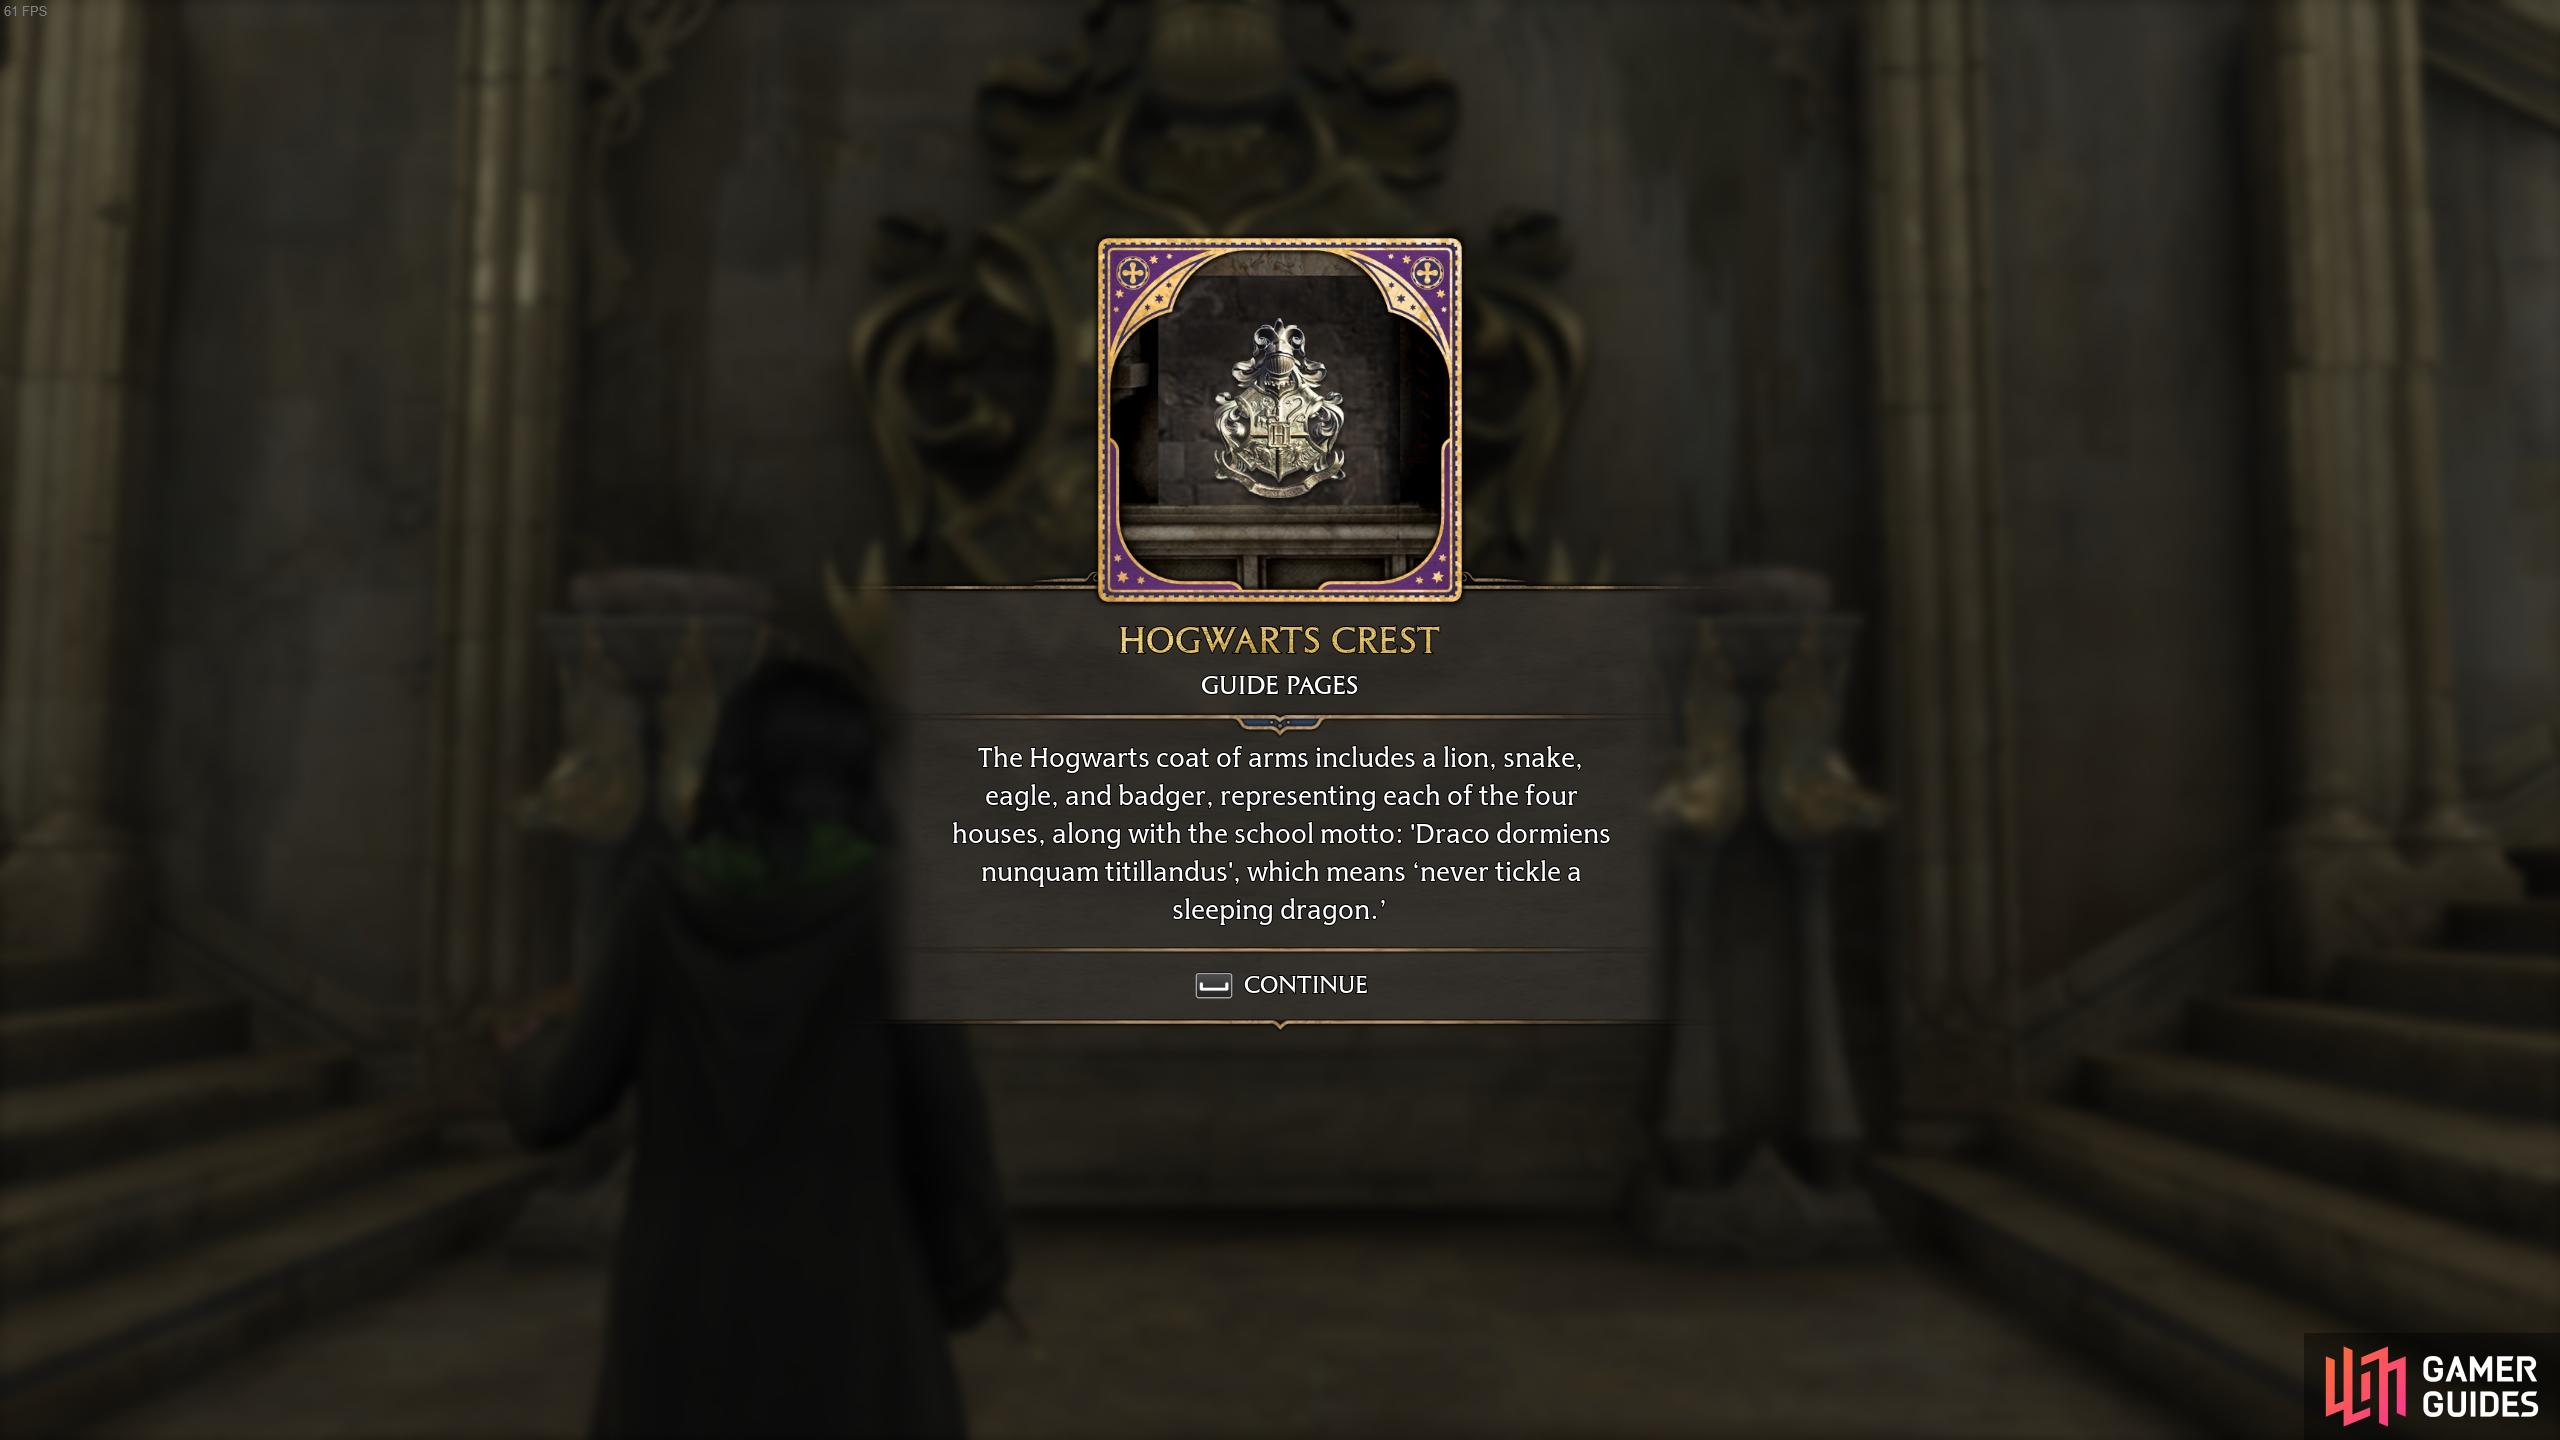 The description for the Hogwart's Crest page.